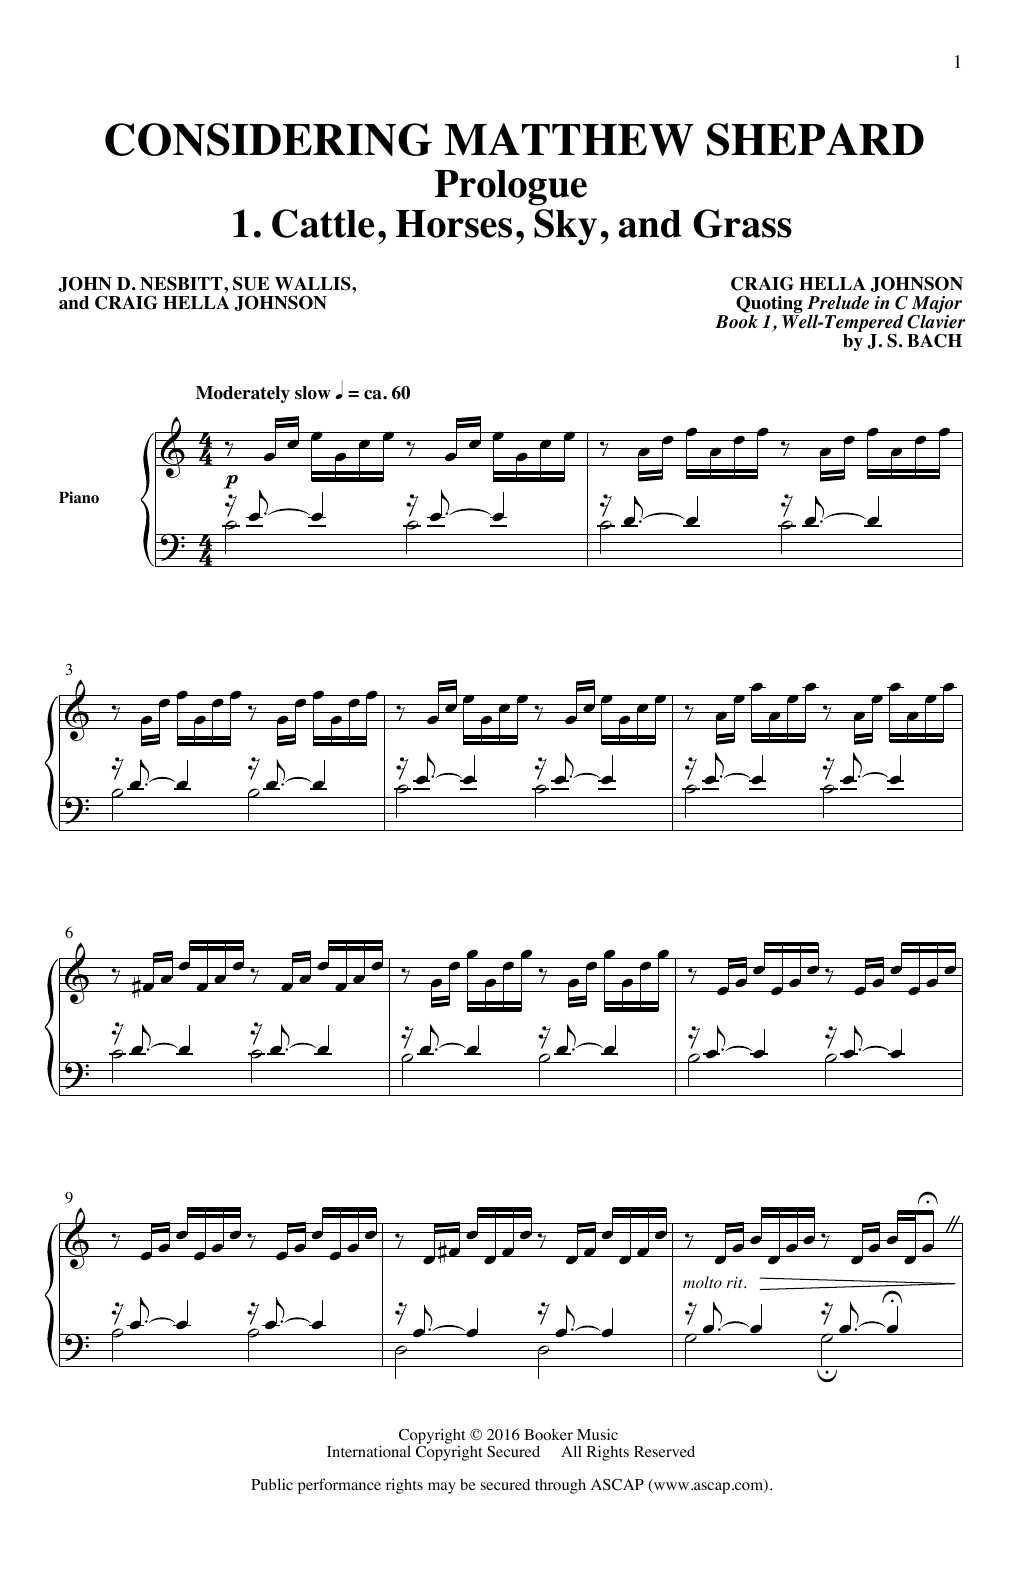 Craig Hella Johnson Considering Matthew Shepard Sheet Music Notes & Chords for SATB Choir - Download or Print PDF